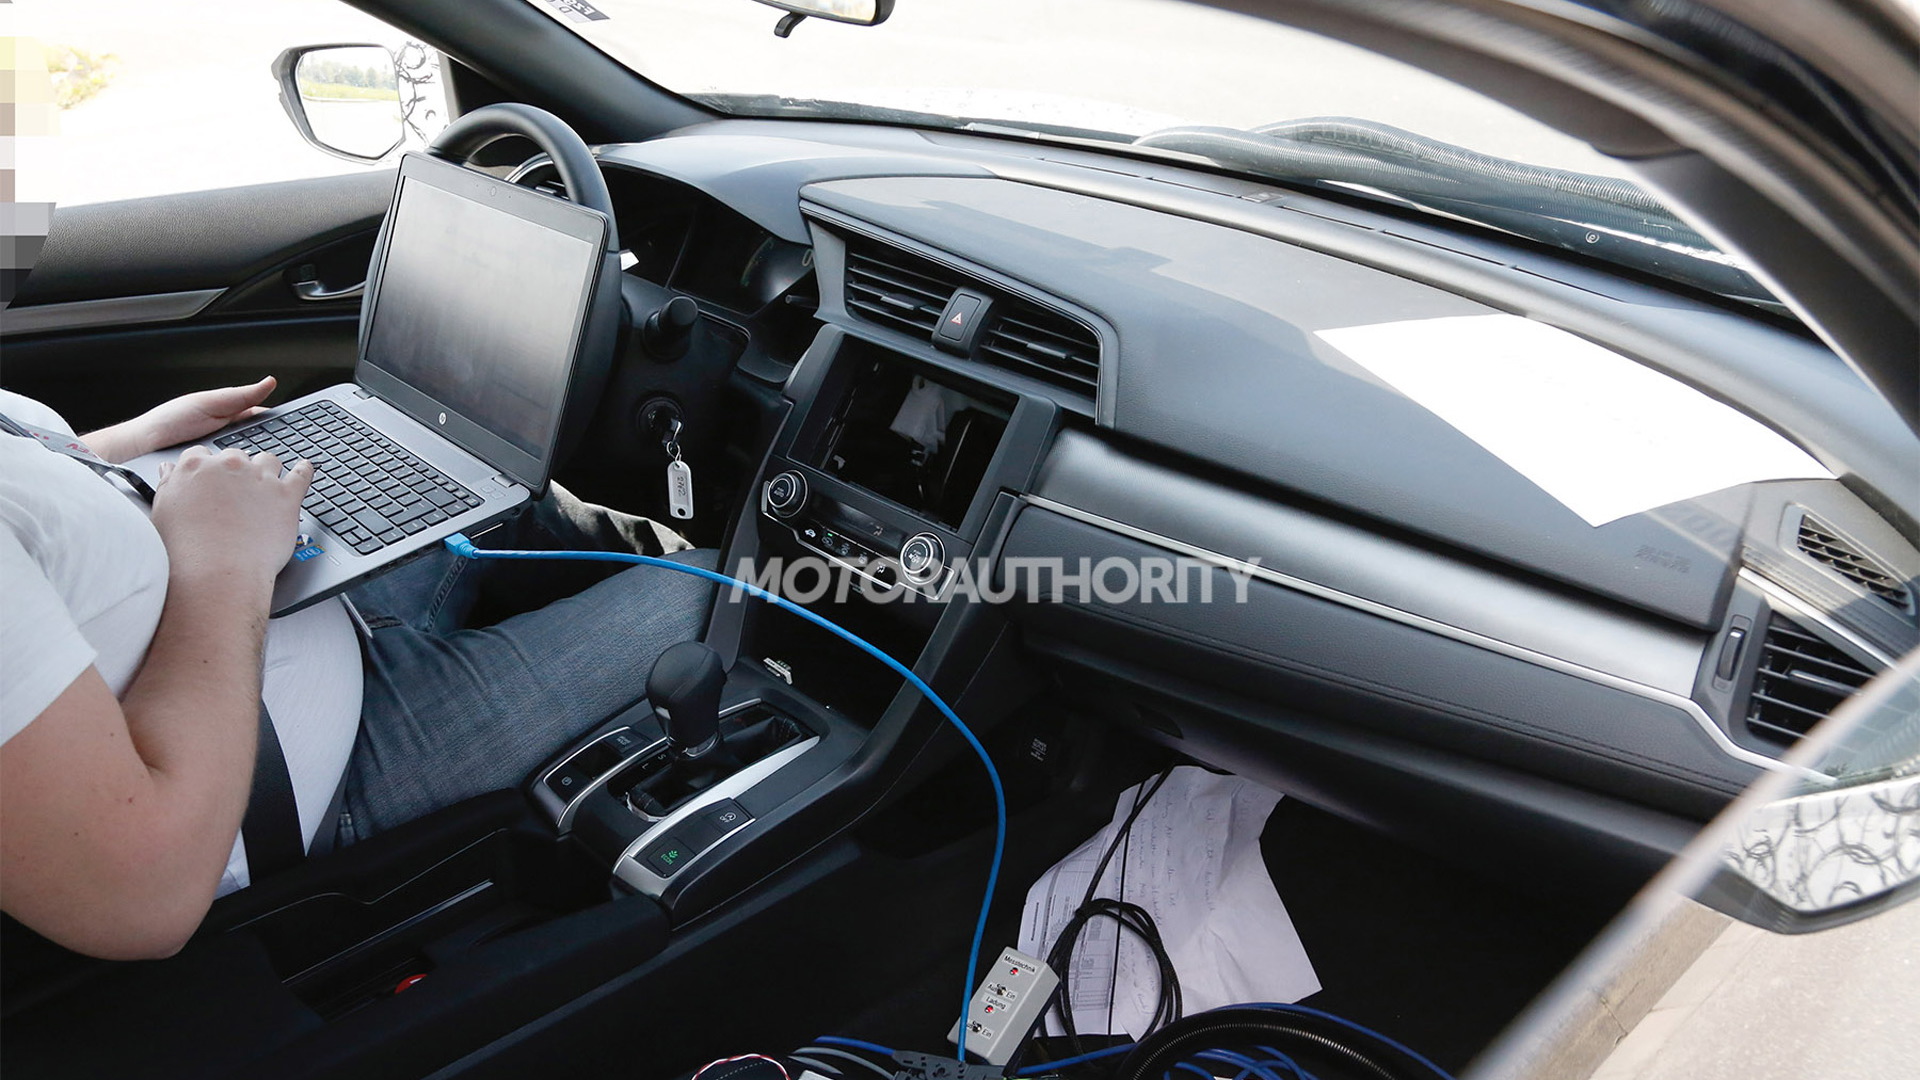 2017 Honda Civic Hatchback spy shots - Image via S. Baldauf/SB-Medien